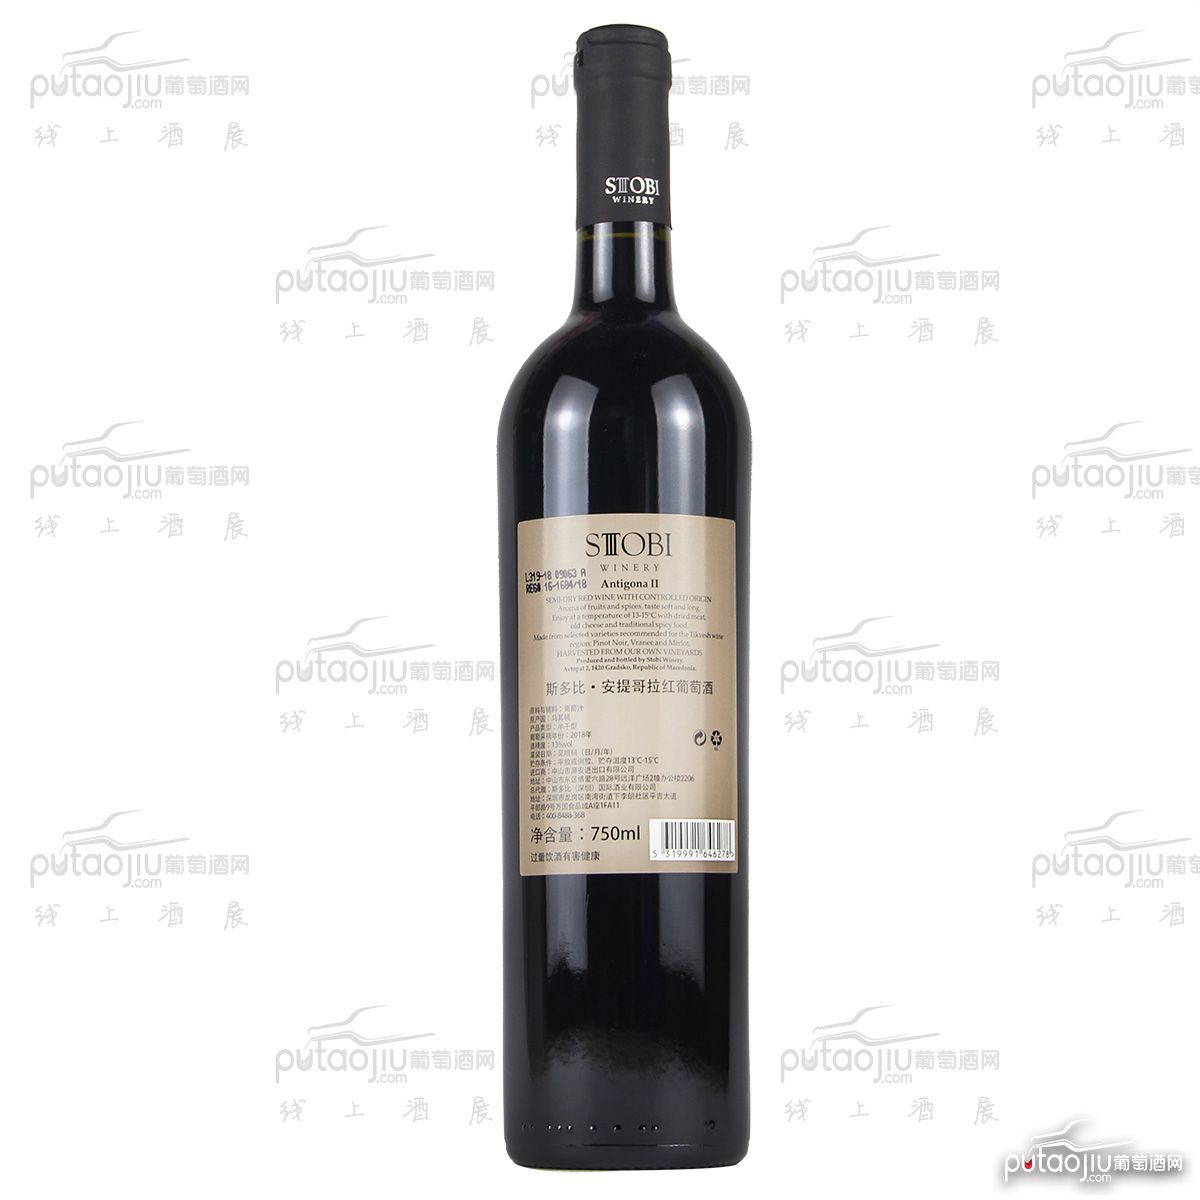 STOBI斯多比酒庄(Antigona II)安提哥拉（高)A级混酿半干红葡萄酒小众国家原装进口北马其顿红酒